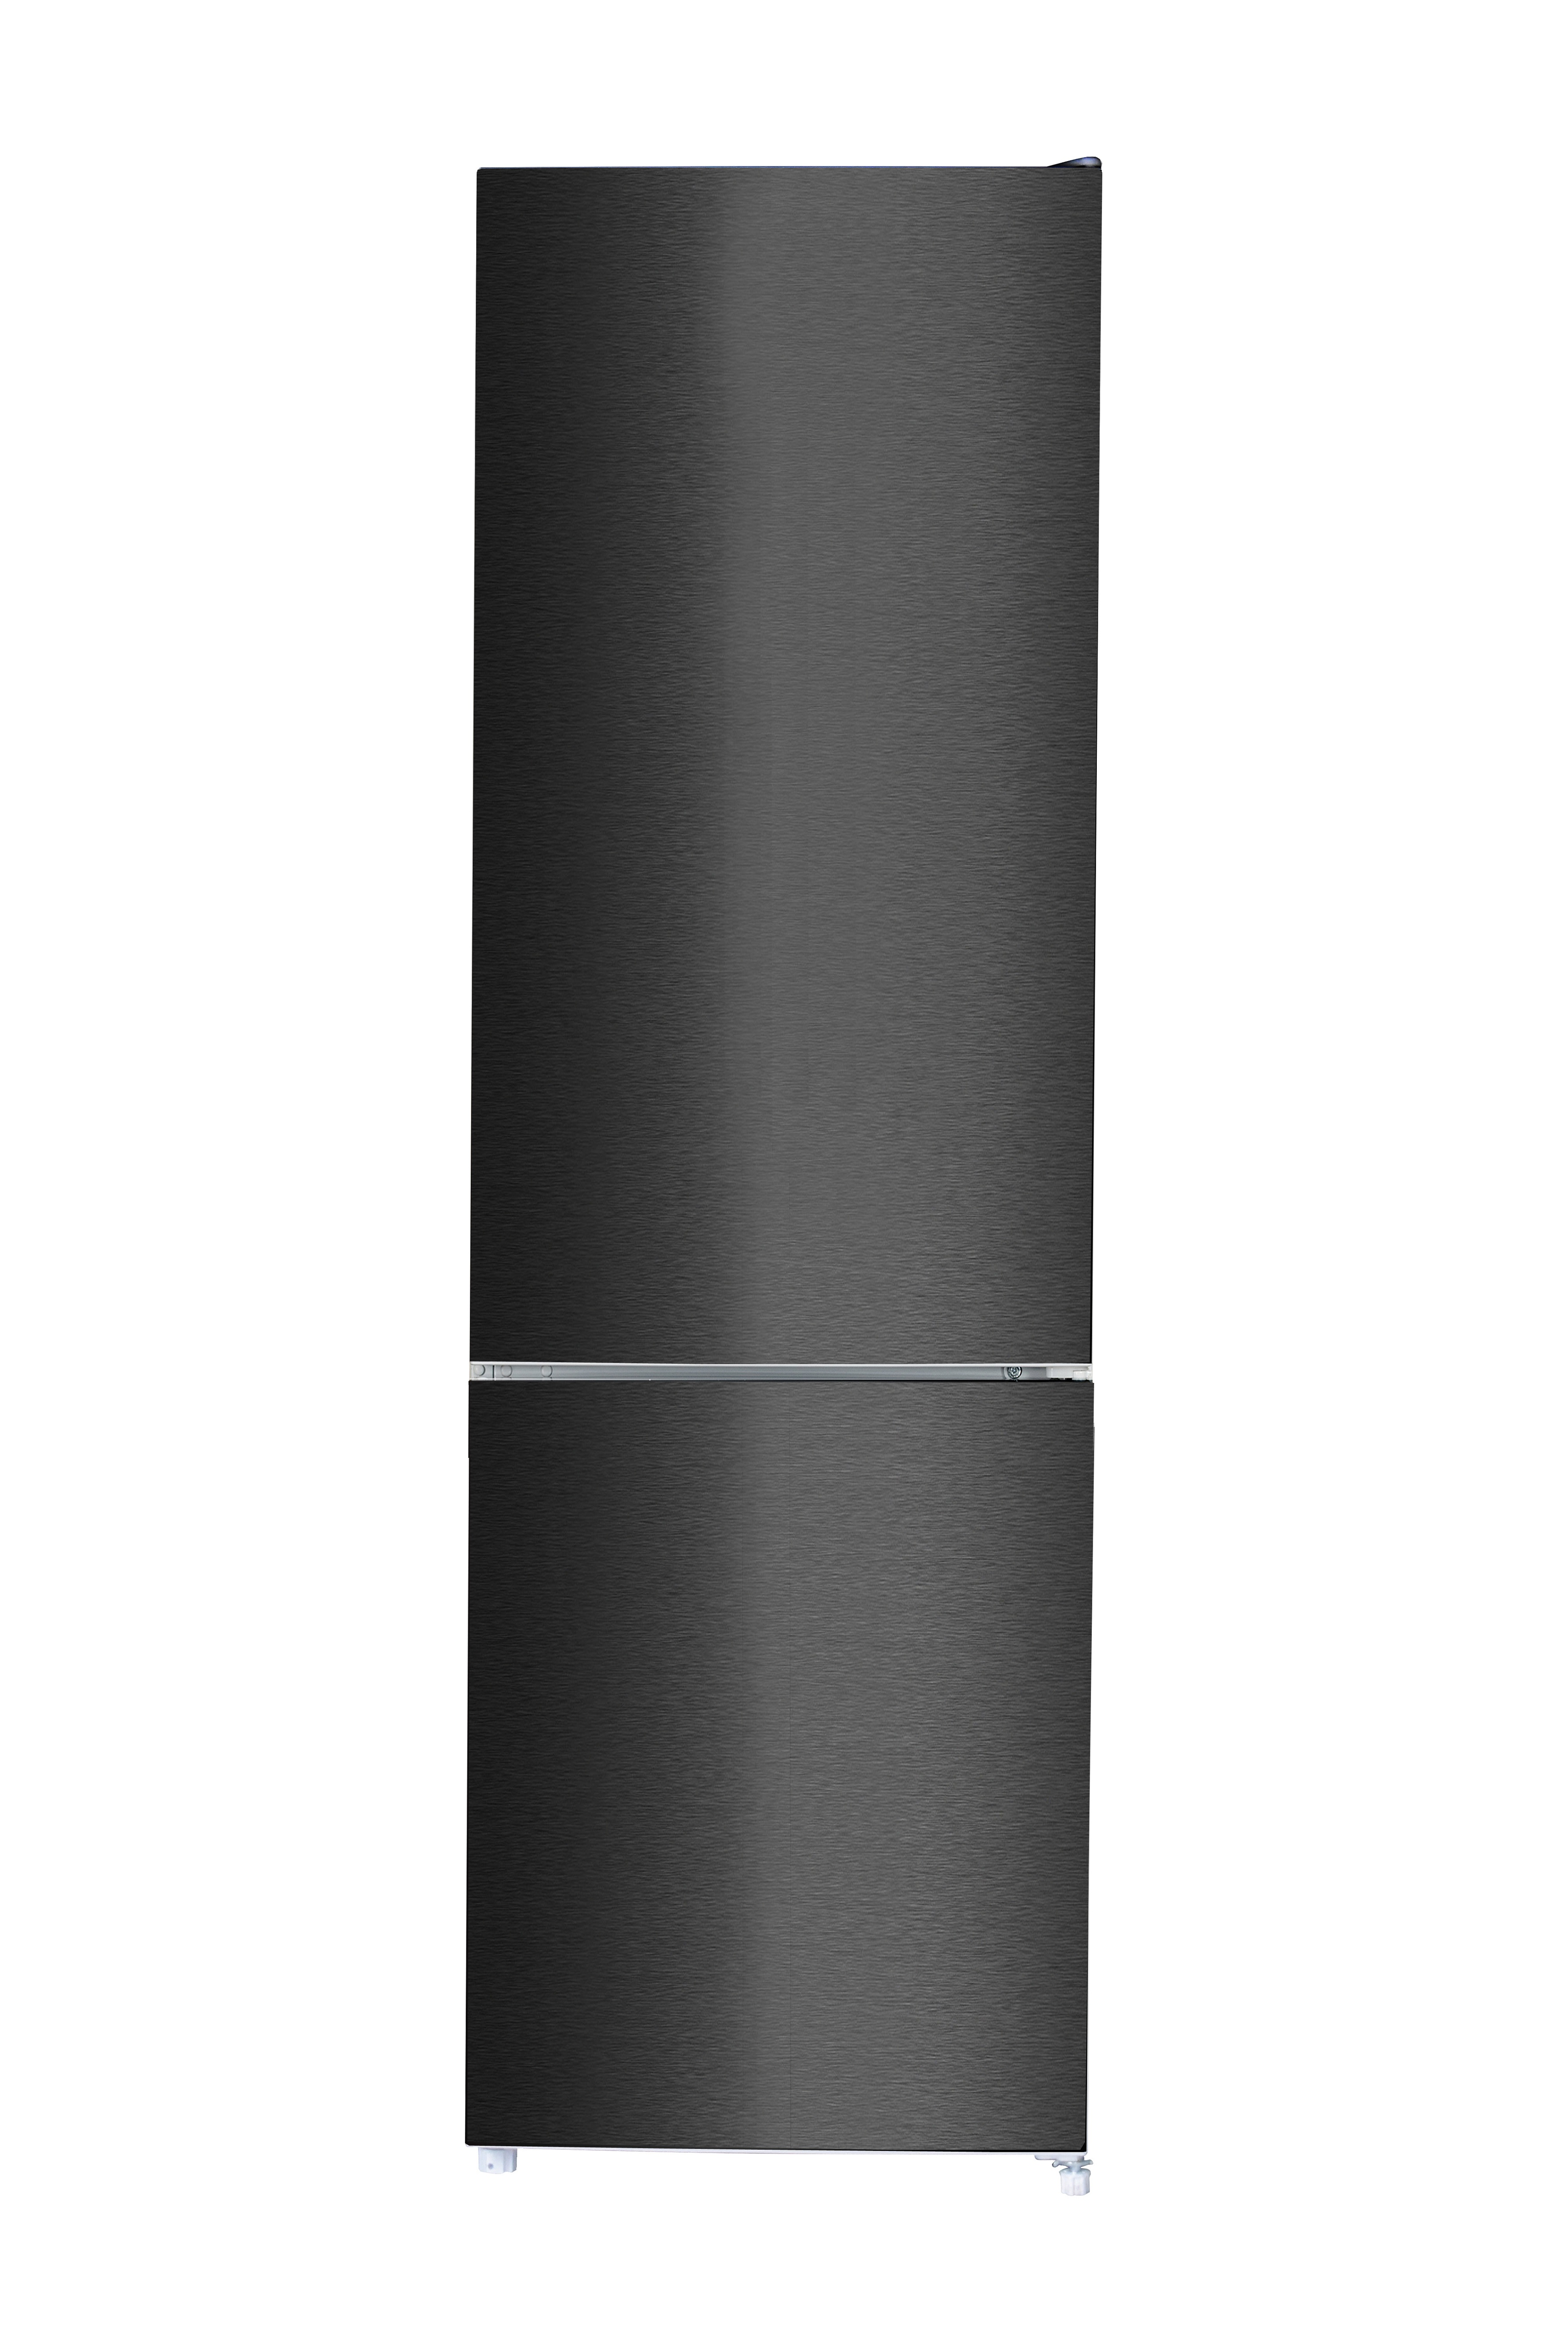 RESPEKTA KG176BS-37 Kühlschrank Black Steel) (D, mm hoch, 1760